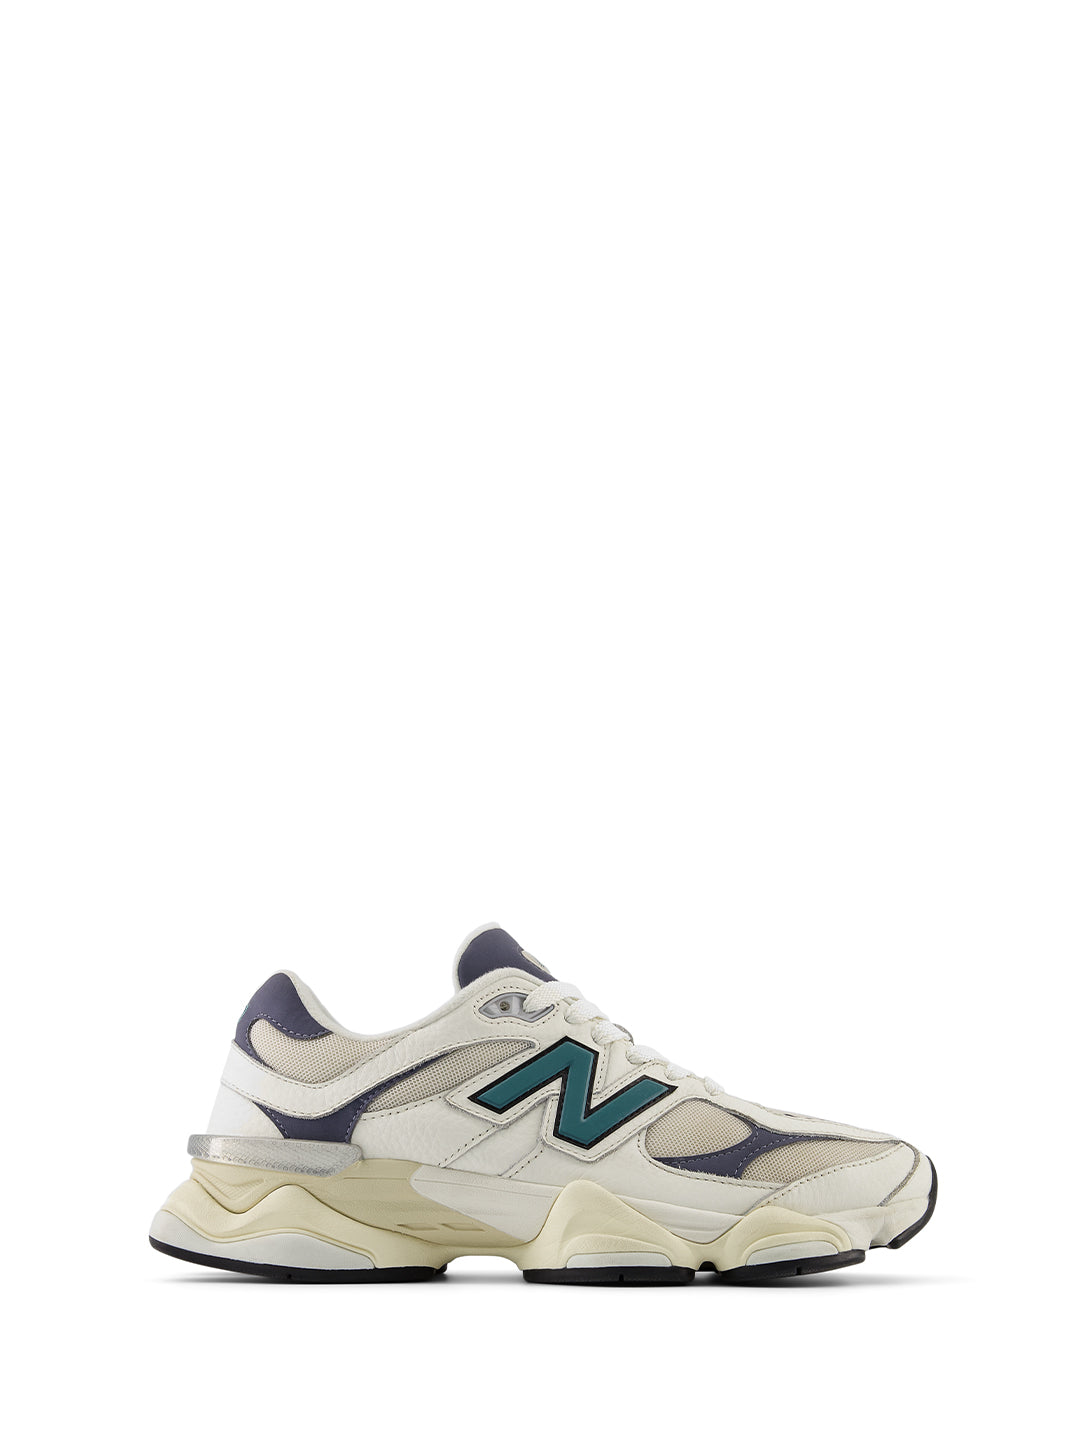 New Balance 9060 sneakers bianco con logo verde